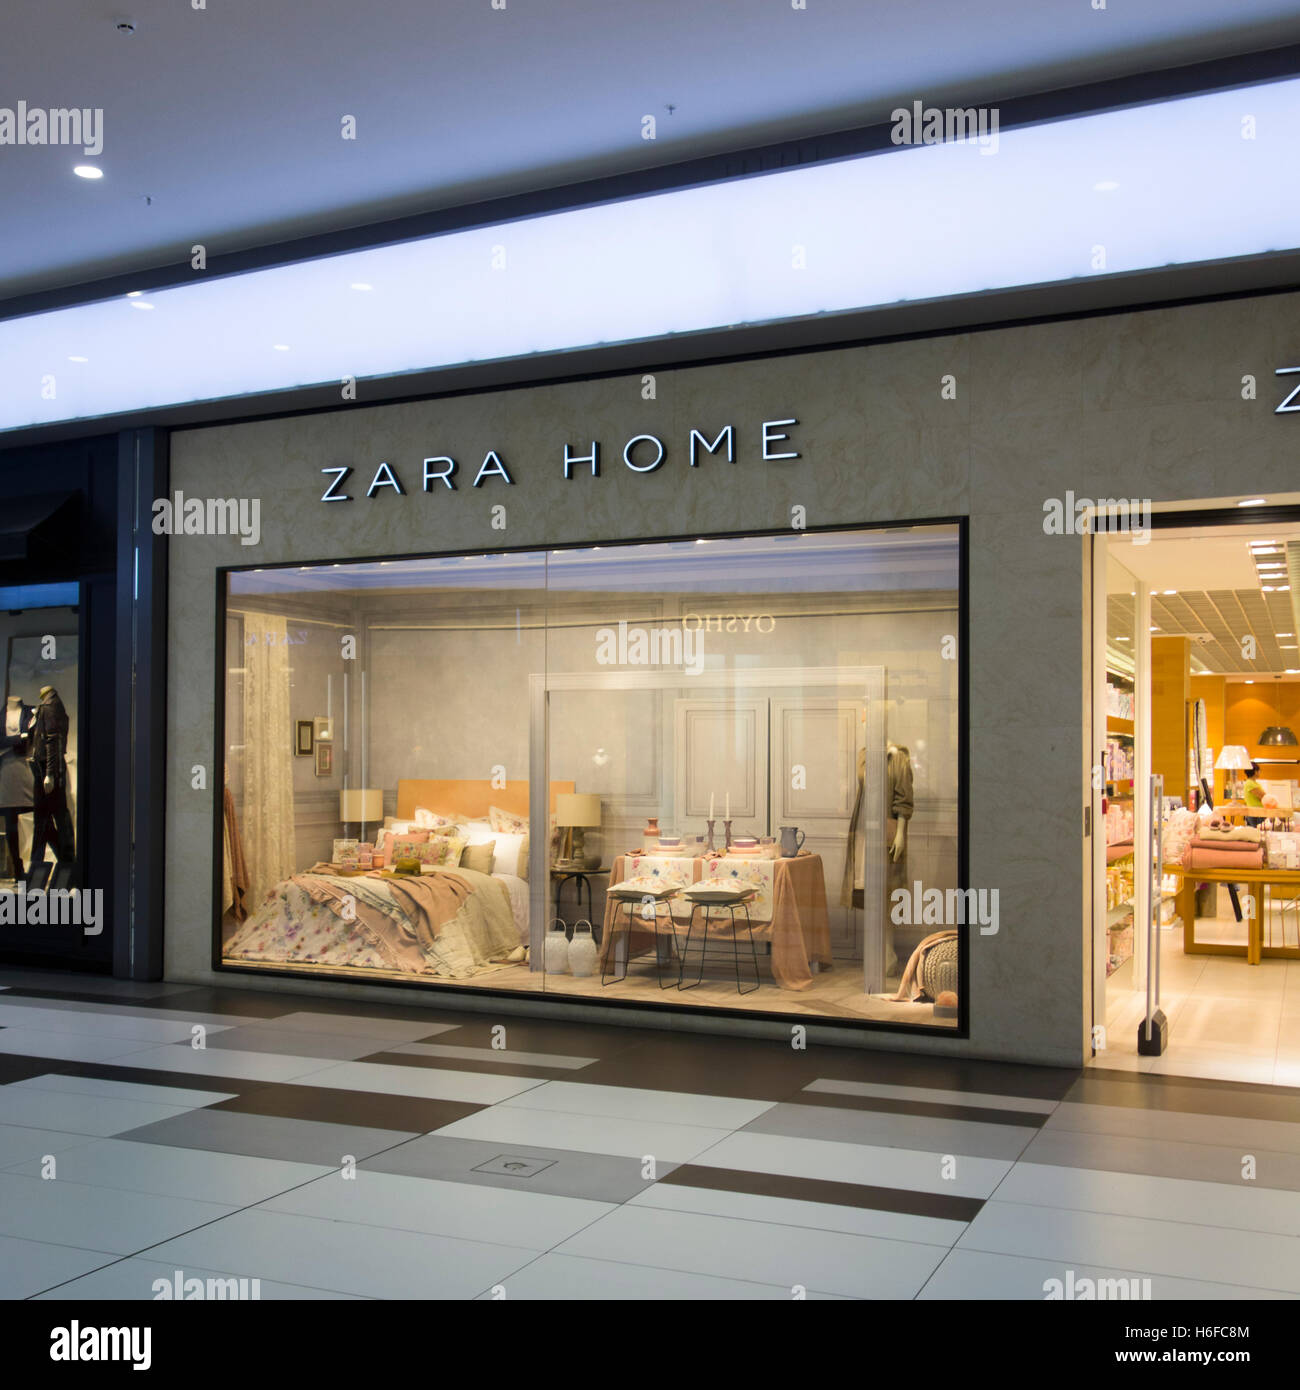 Zara Home Banque d'image et photos - Alamy